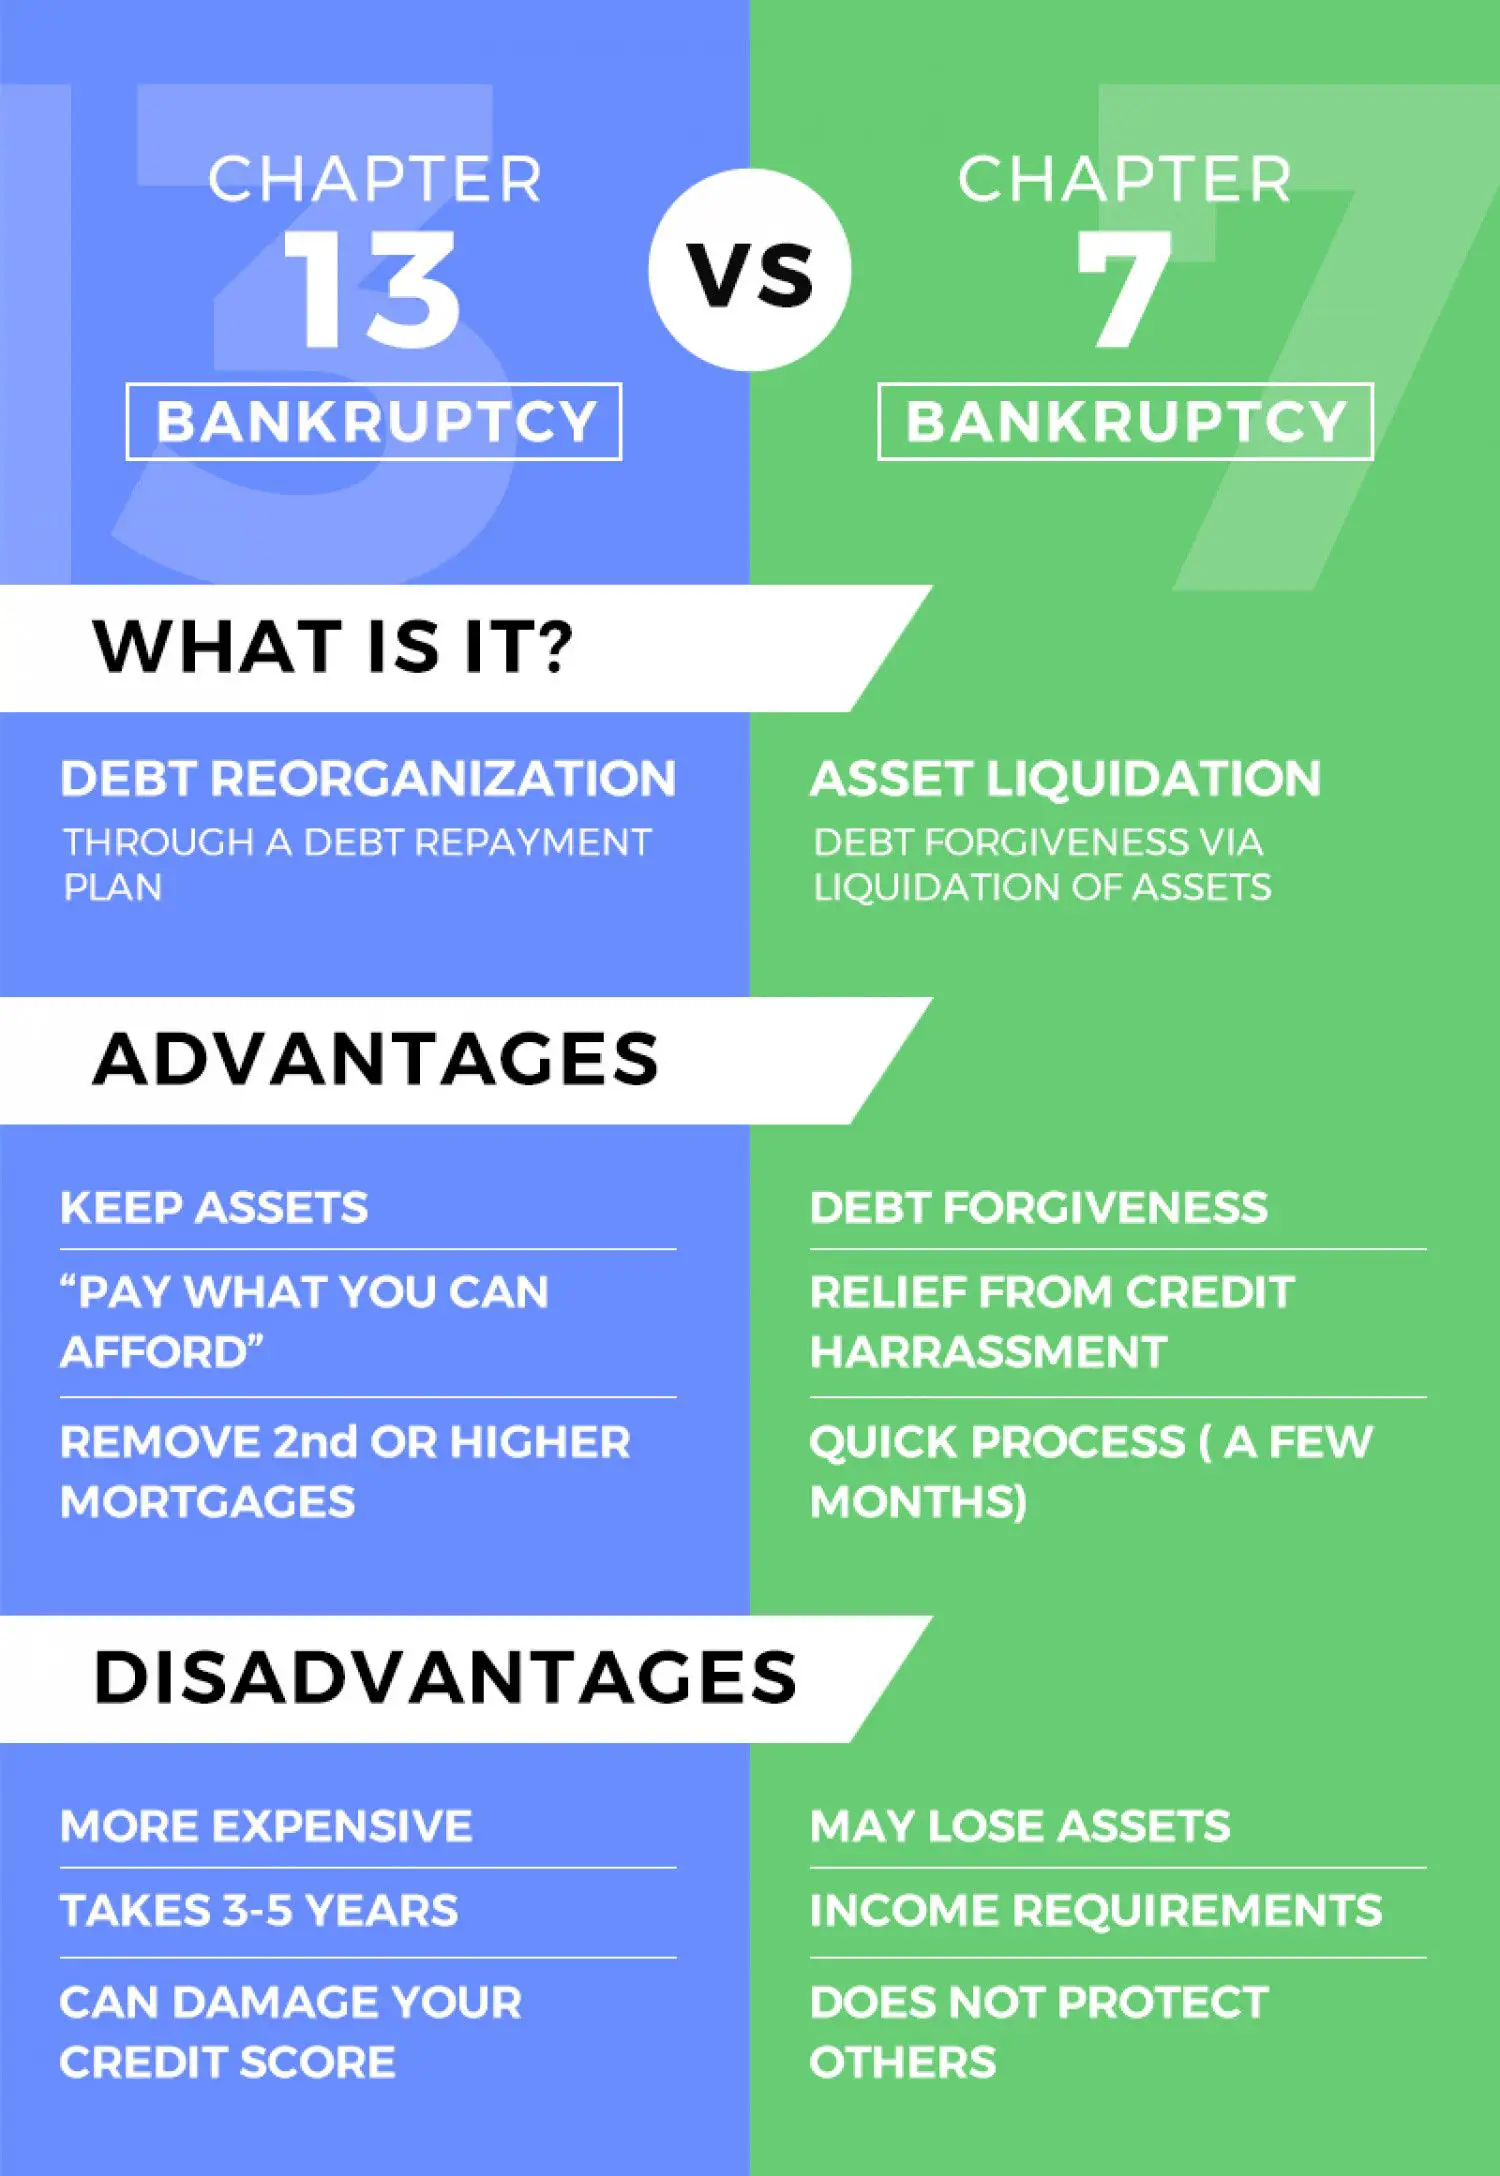 Chapter 13 Bankruptcy vs. Chapter 7 Bankruptcy